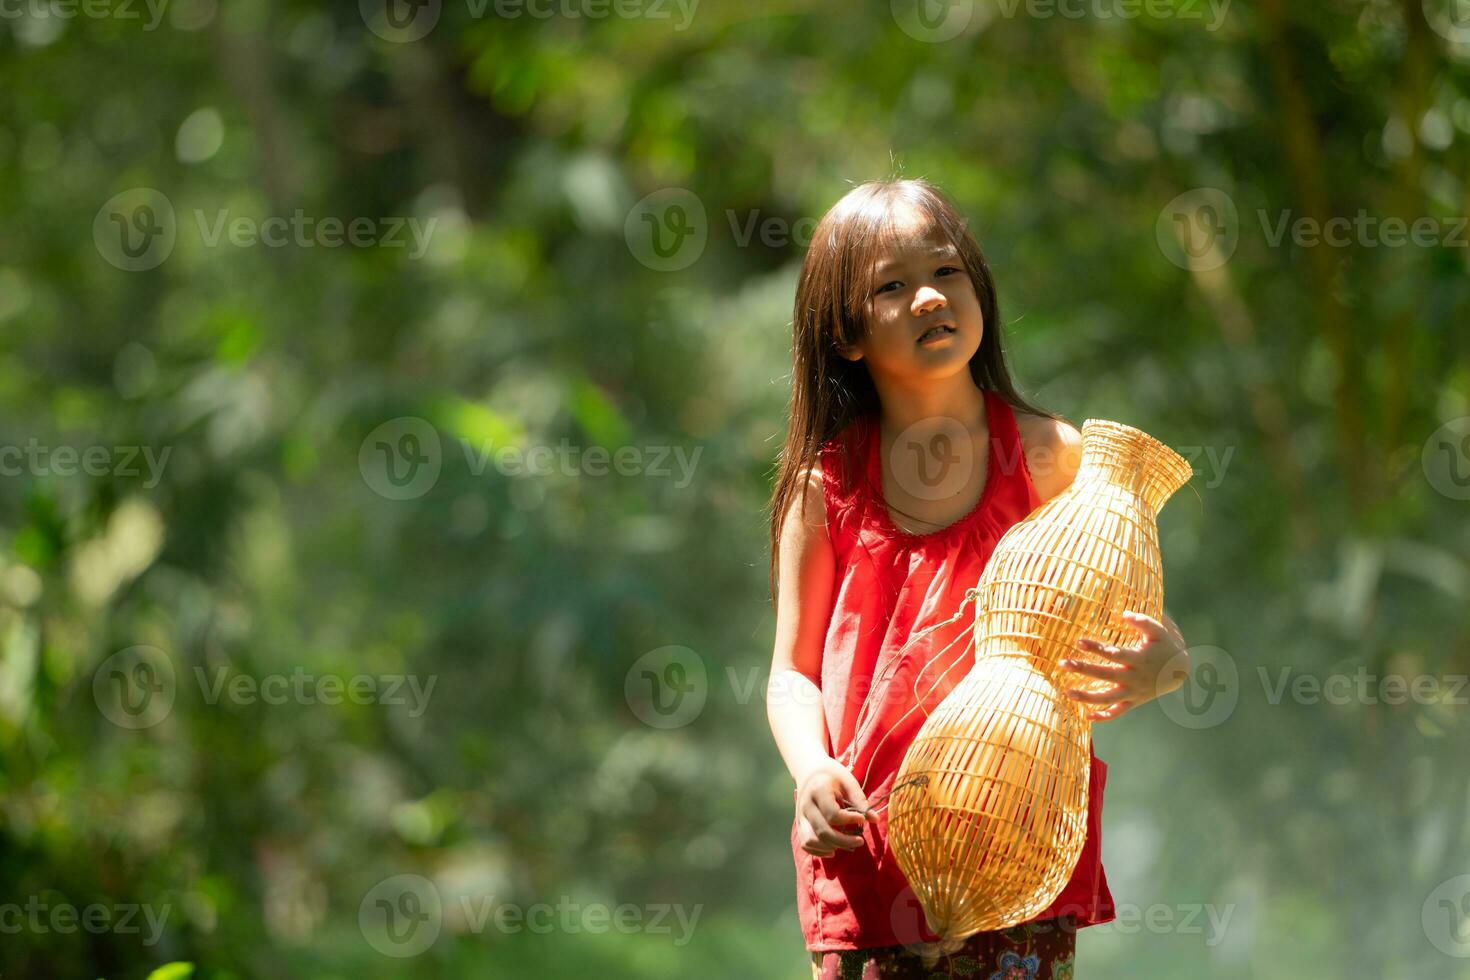 pequeno ásia menina dentro vermelho vestir segurando pescaria equipamento dentro a floresta, rural Tailândia vivo vida conceito foto